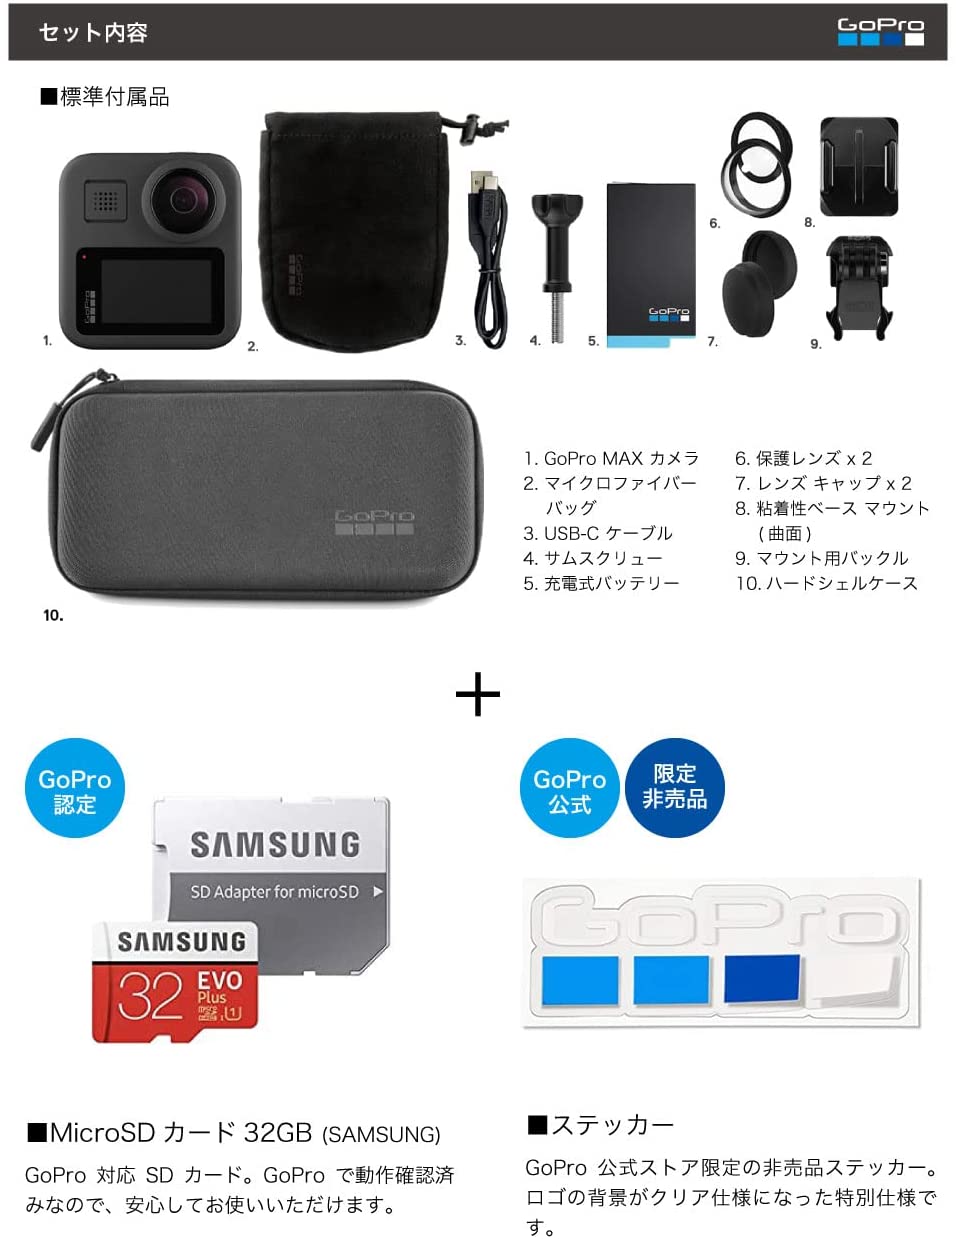 GoPro HERO5 Black (日本国内正規保証品)5/30動作確認済み - library 